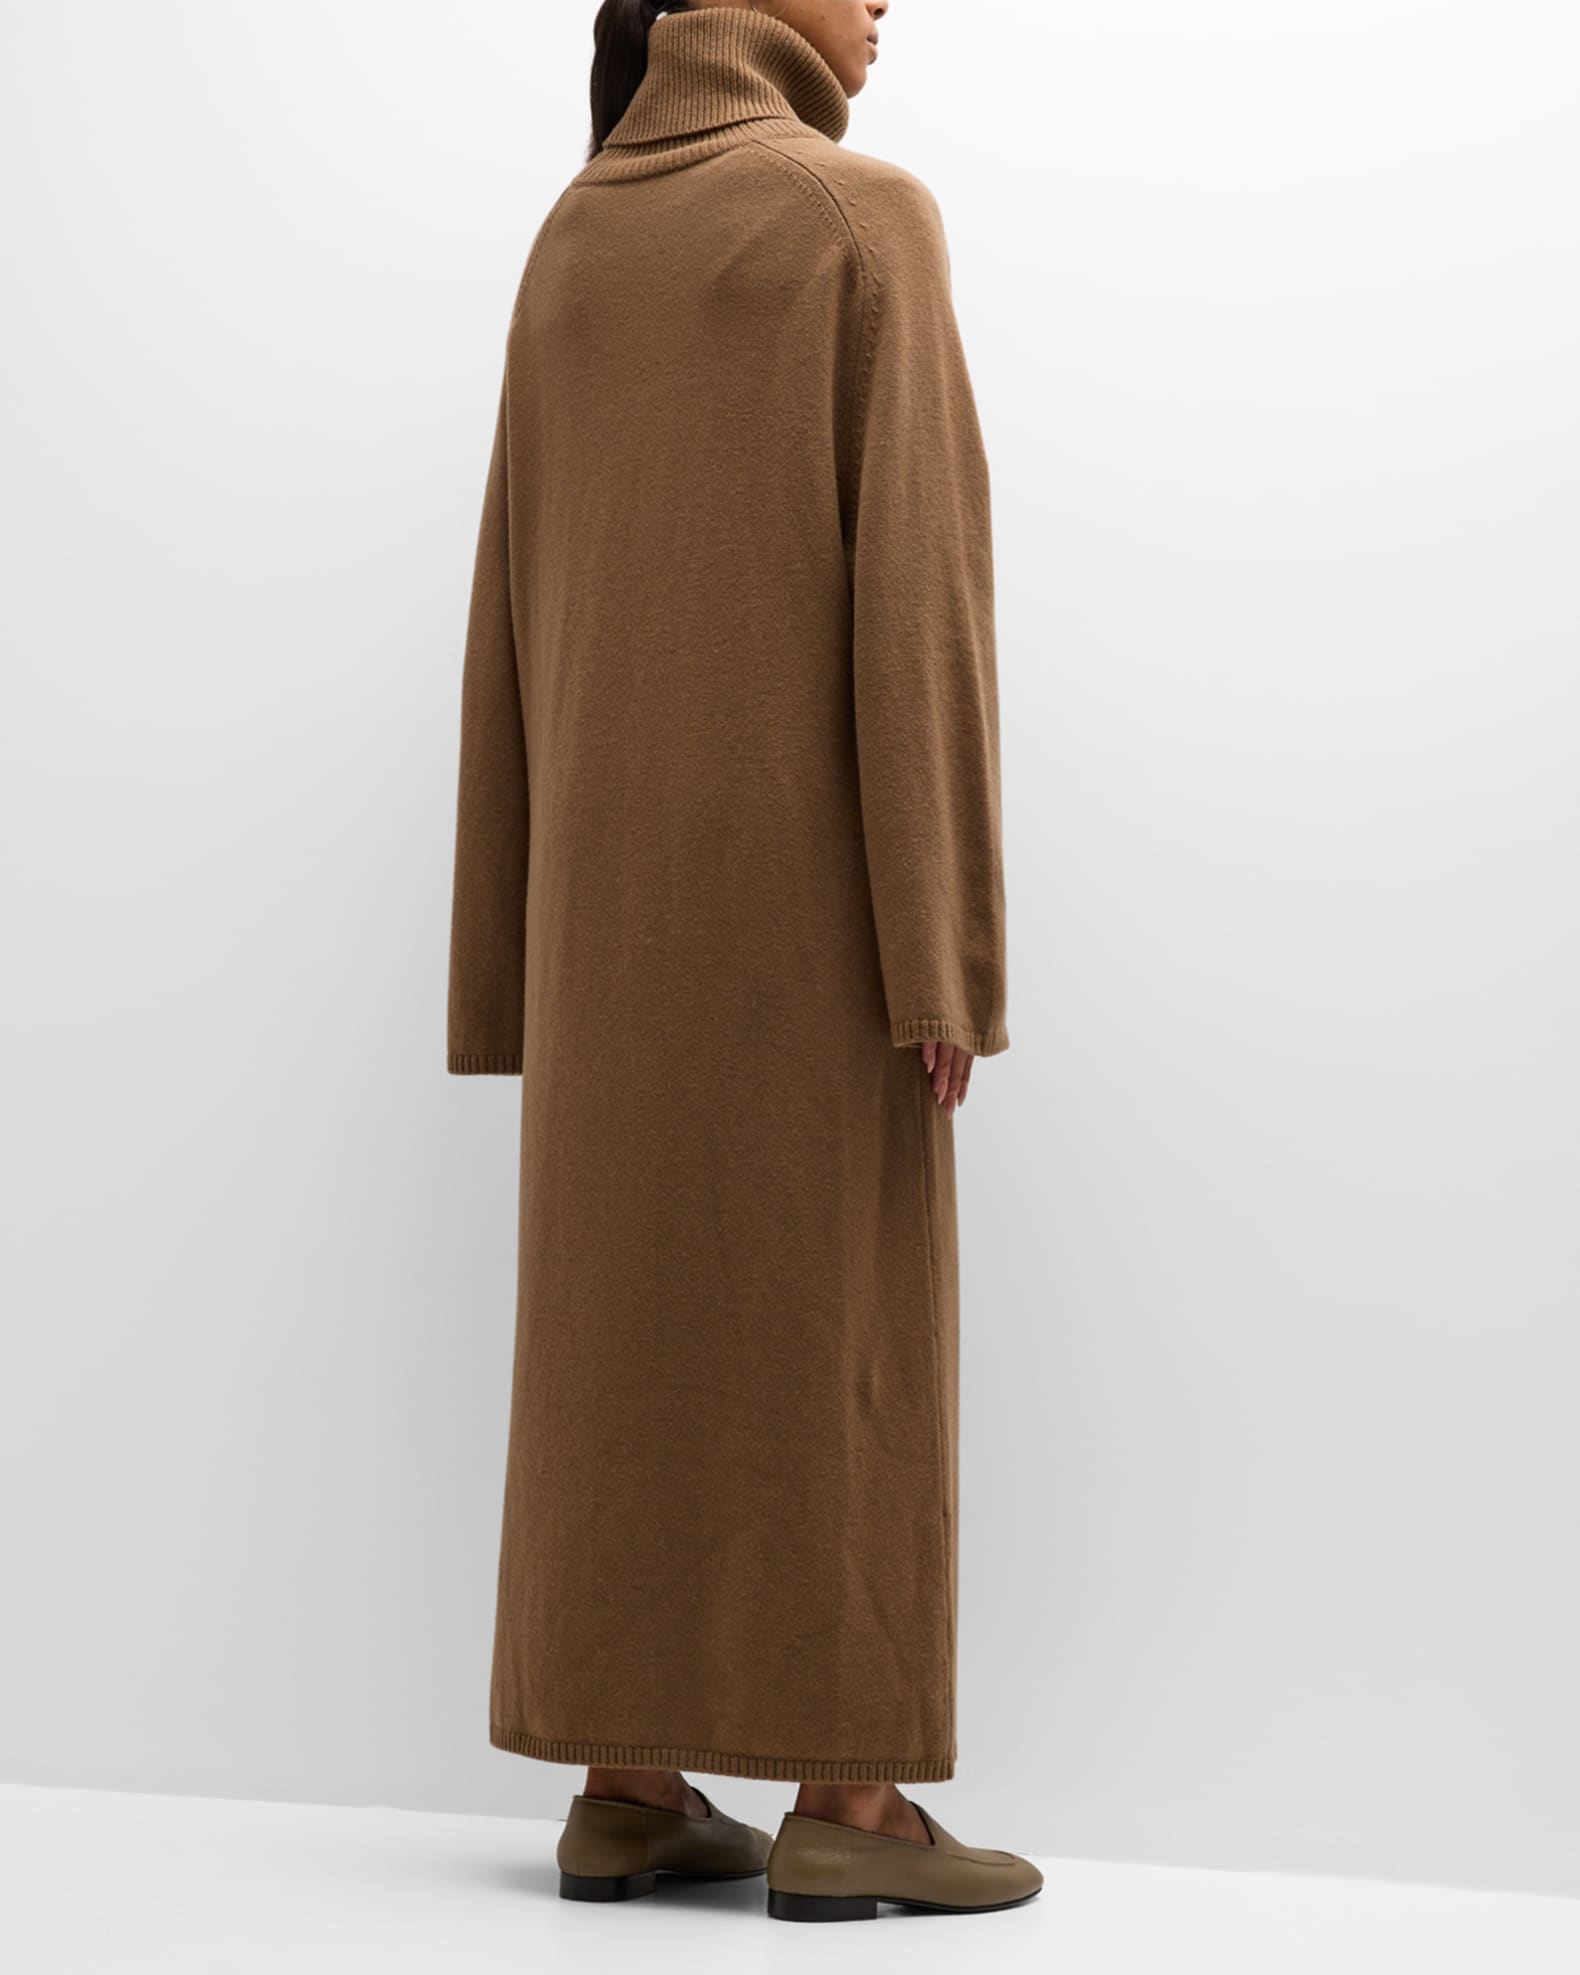 Joseph Viviane Front Slit Wool Dress | Neiman Marcus